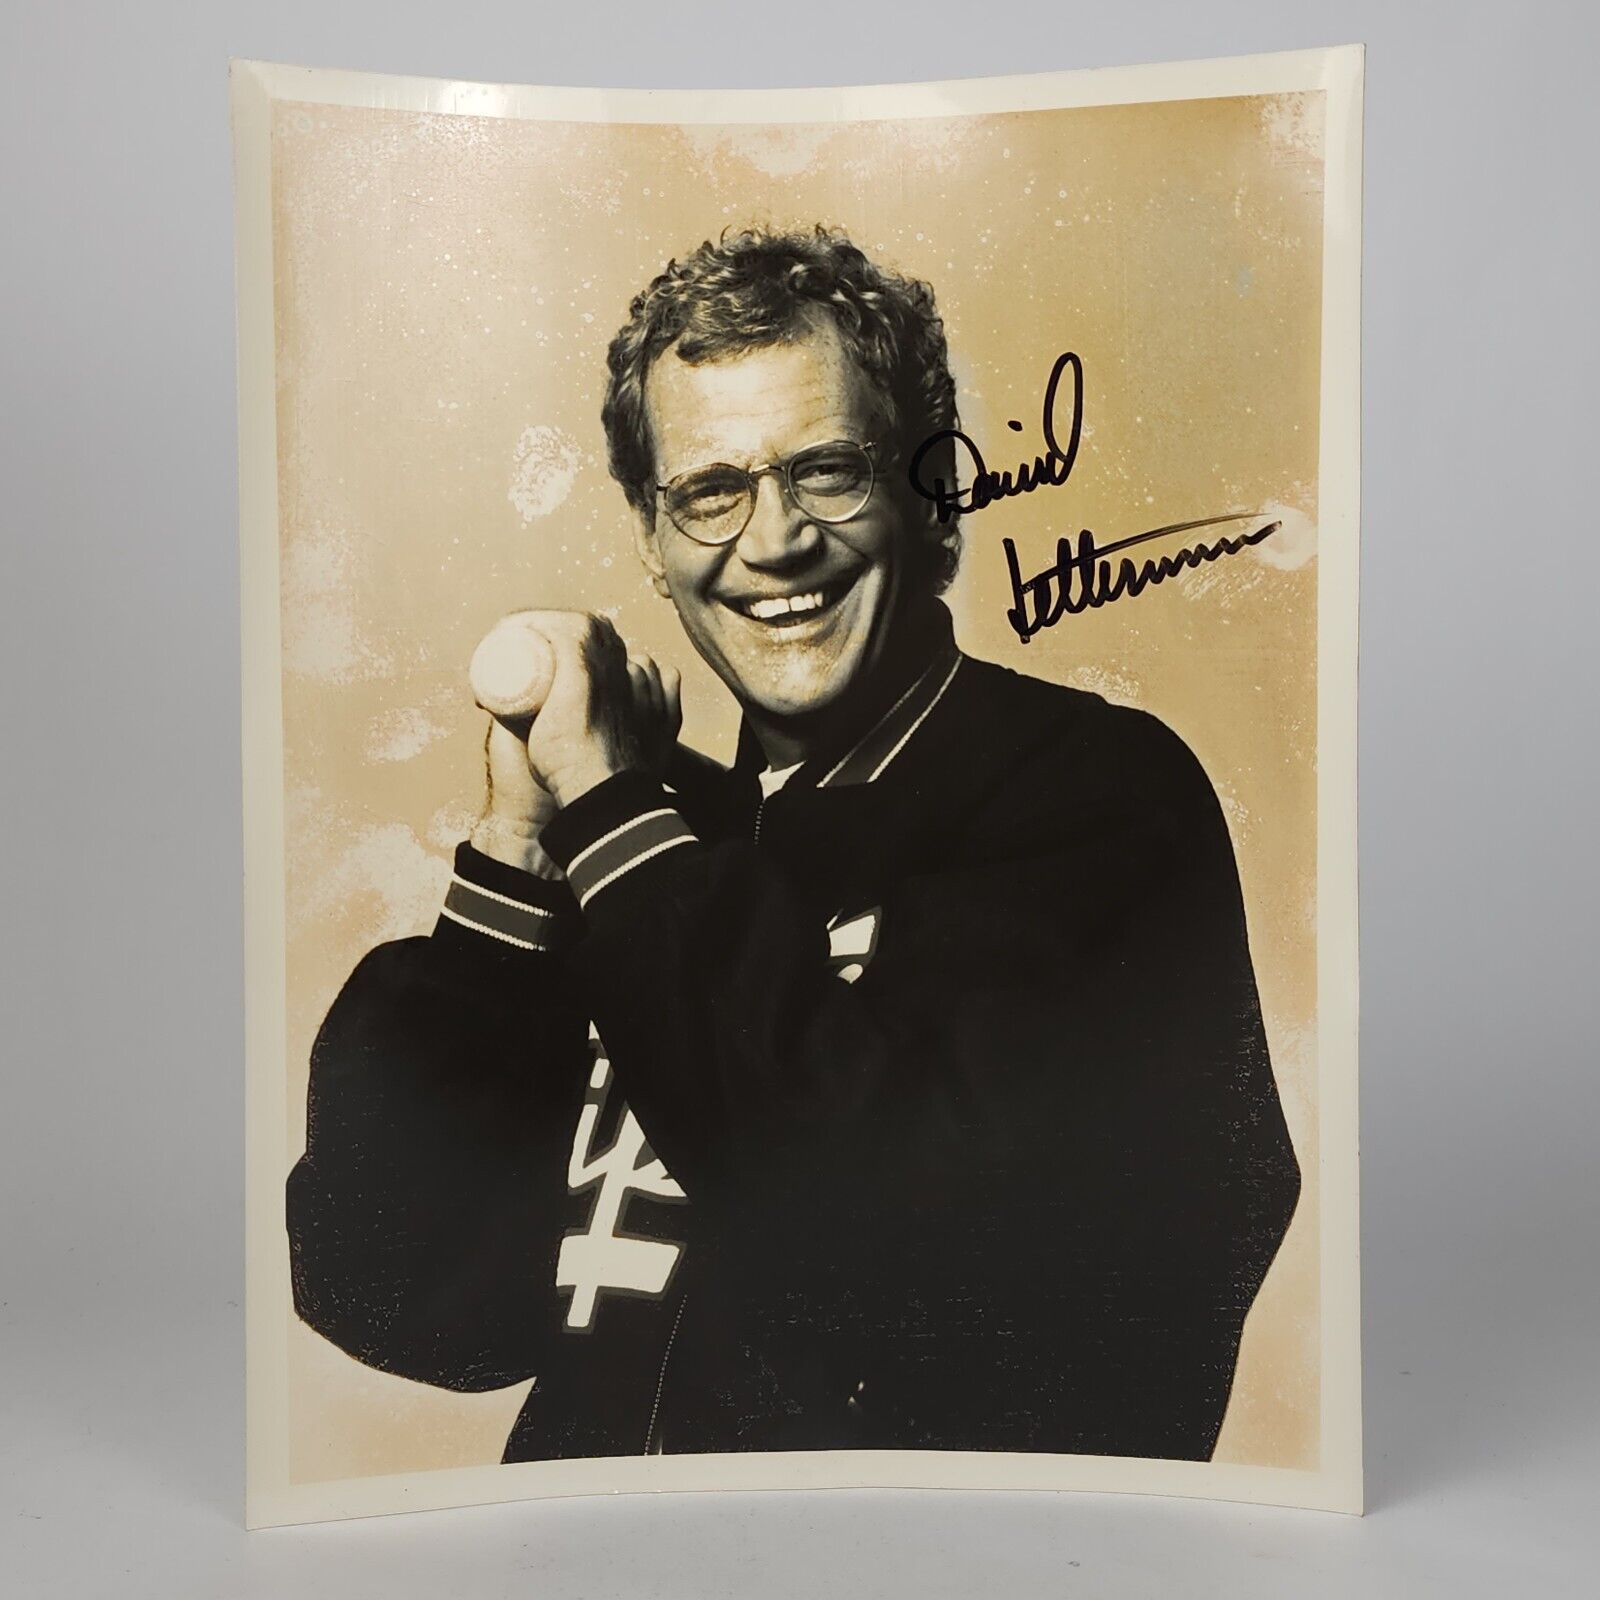 Vintage David Letterman Signed 8x10 Photograph Holding Baseball Bat Autograph